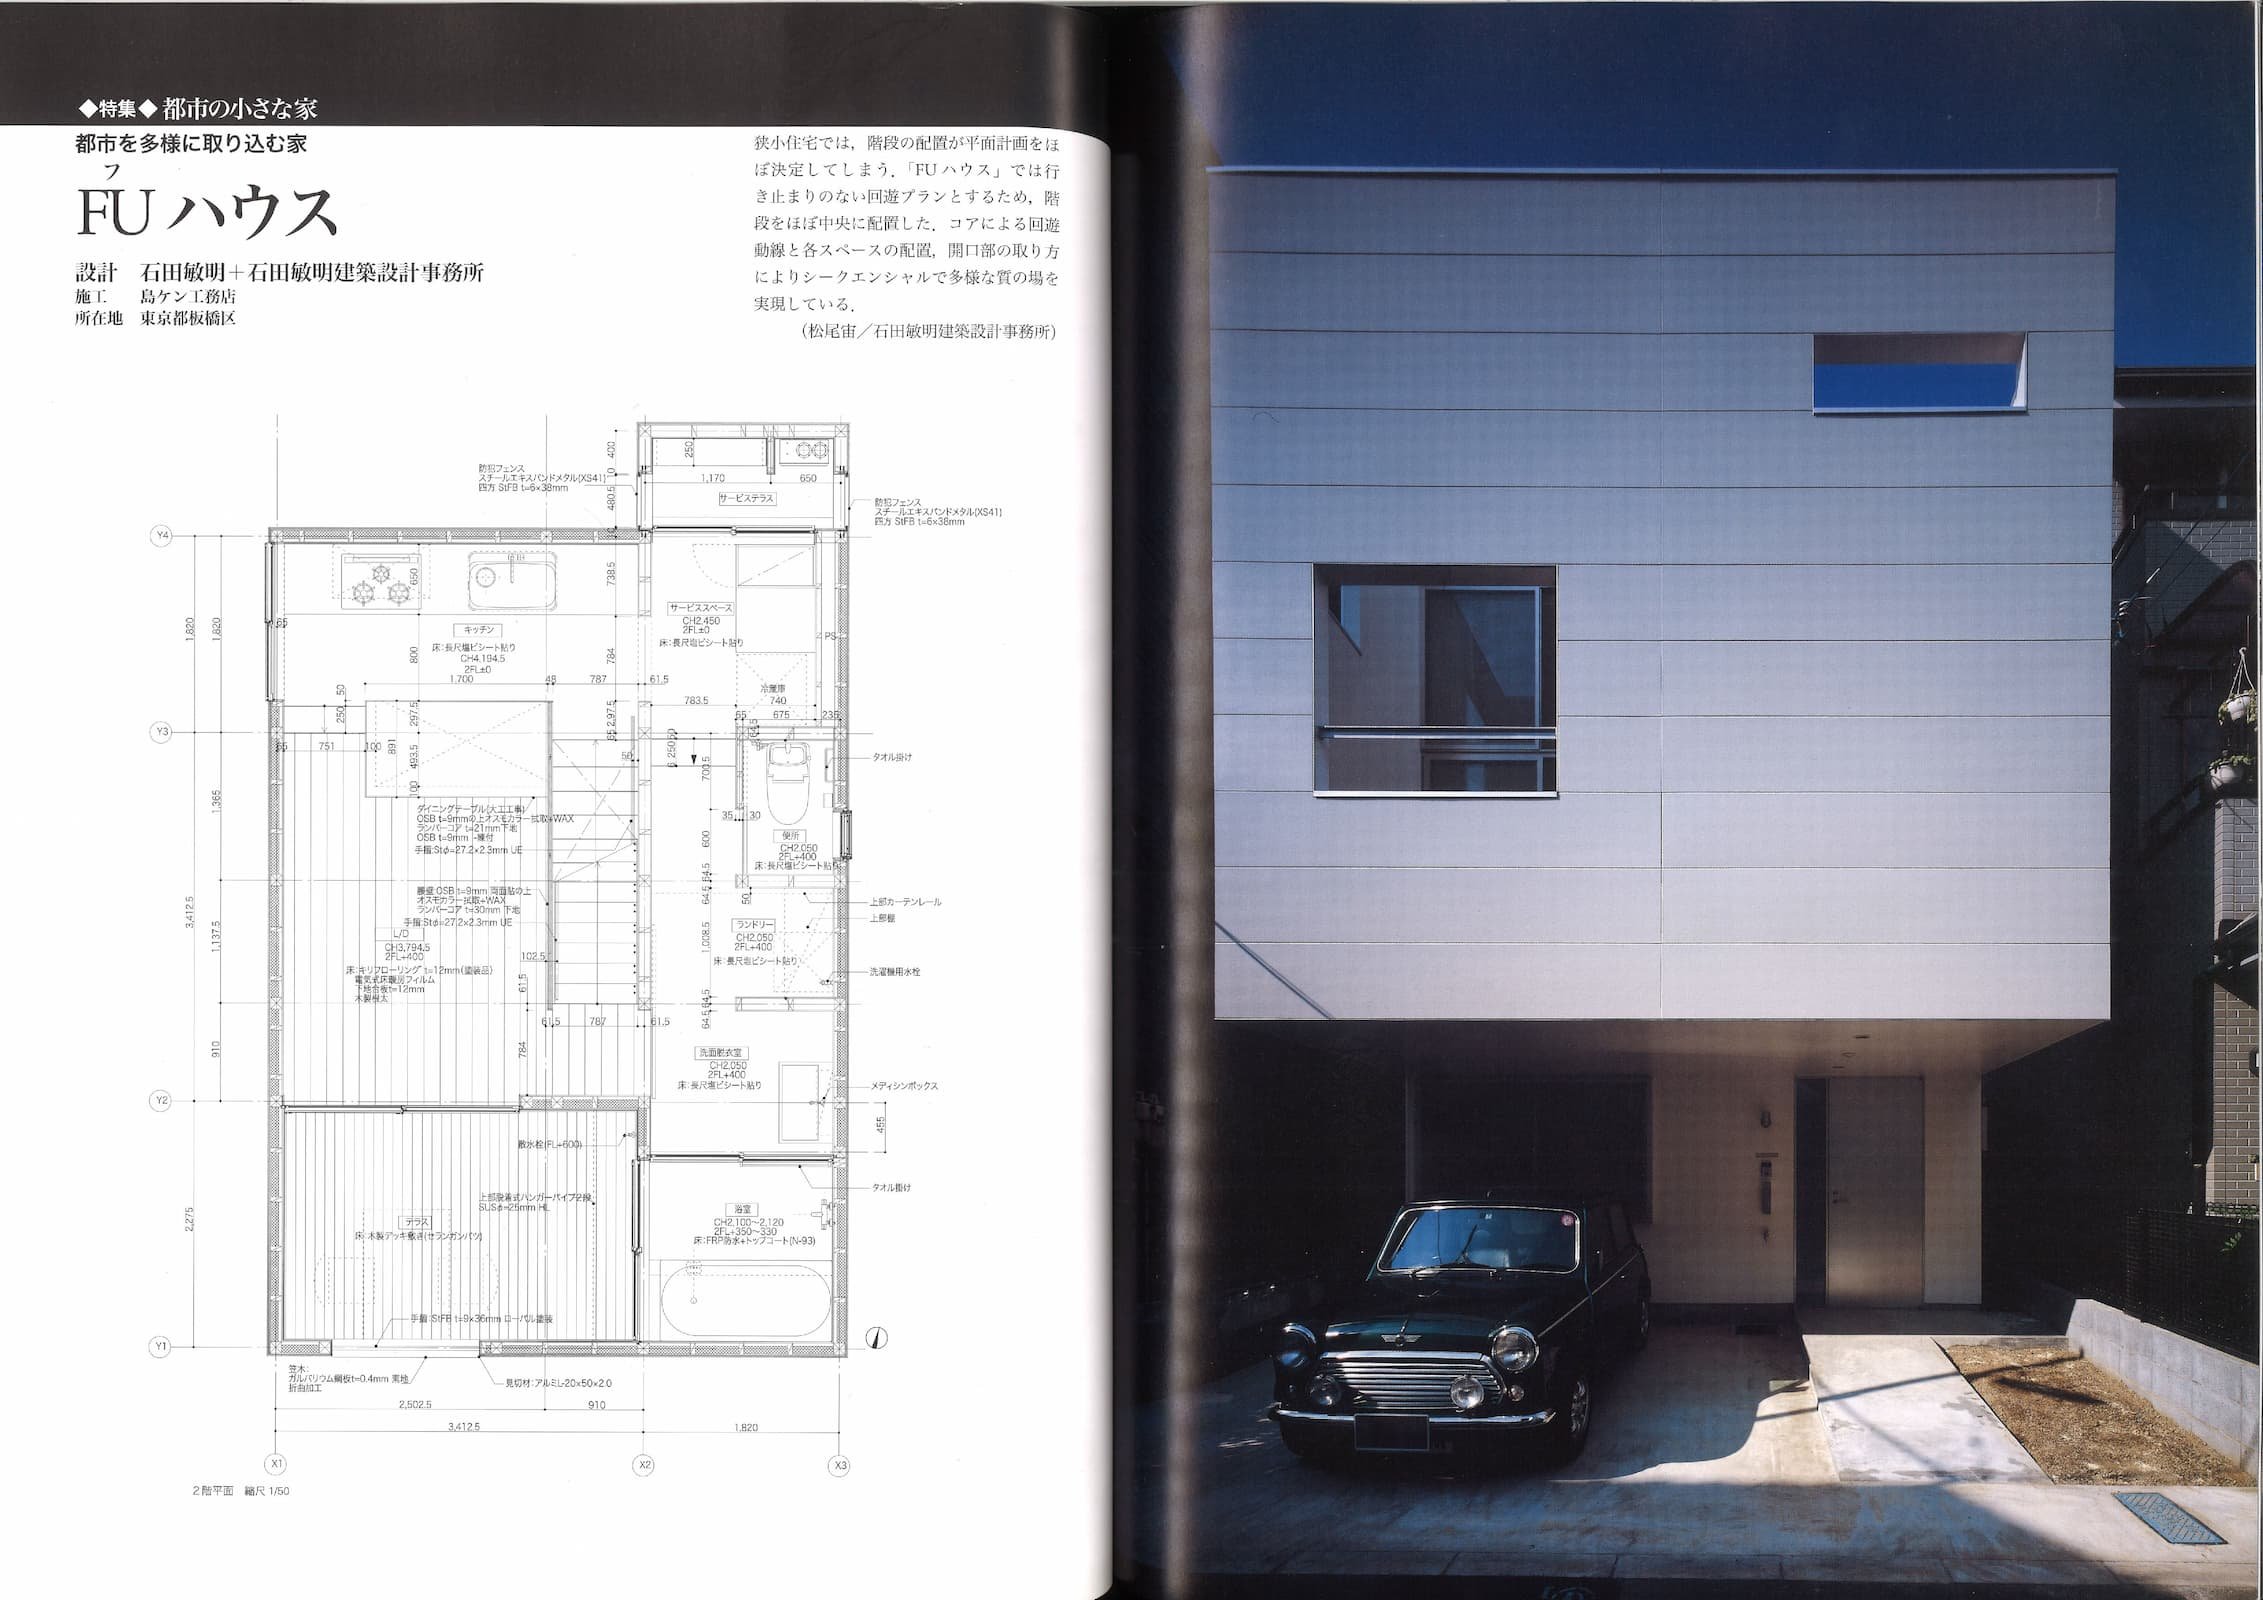 住宅特集 - Housing Special Feature 260 - FU House + Iron House_Page_2.jpg